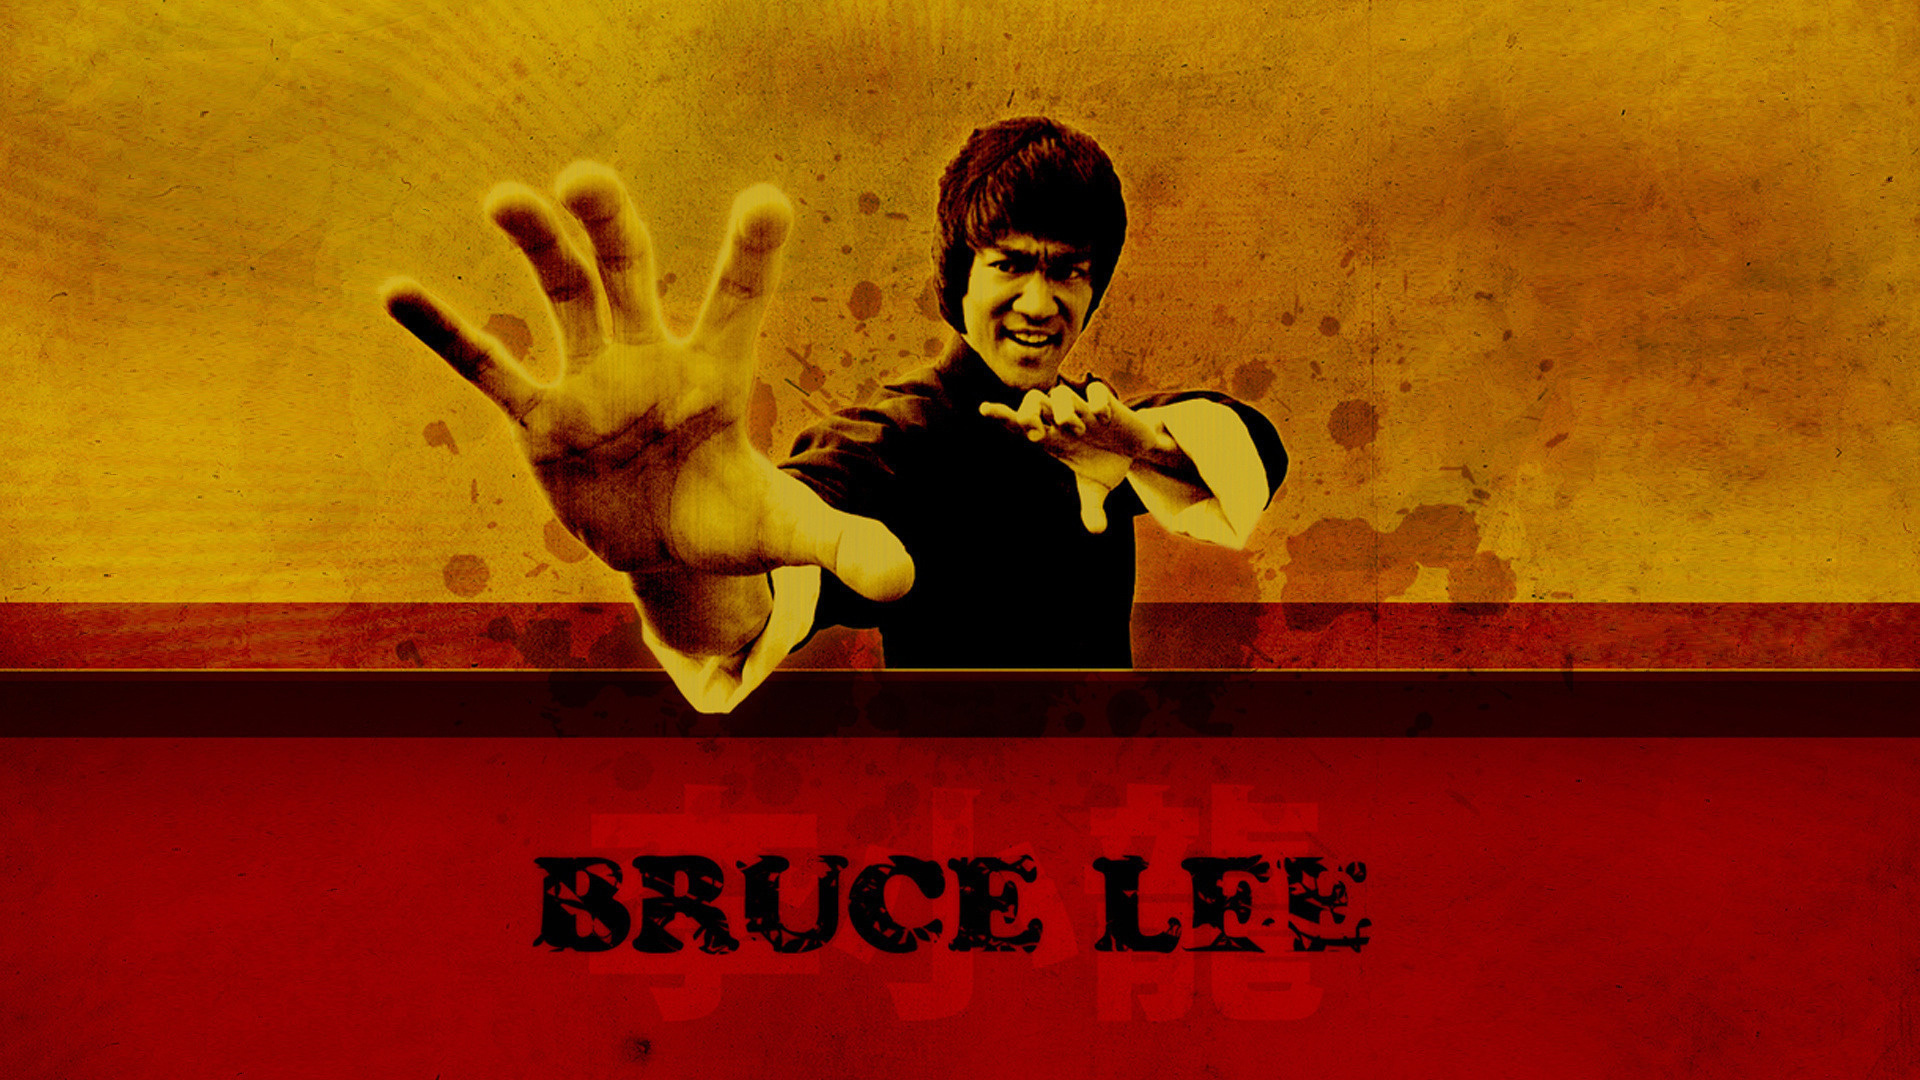 Bruce Lee Fighting HD Wallpaper FullHDwpp Full